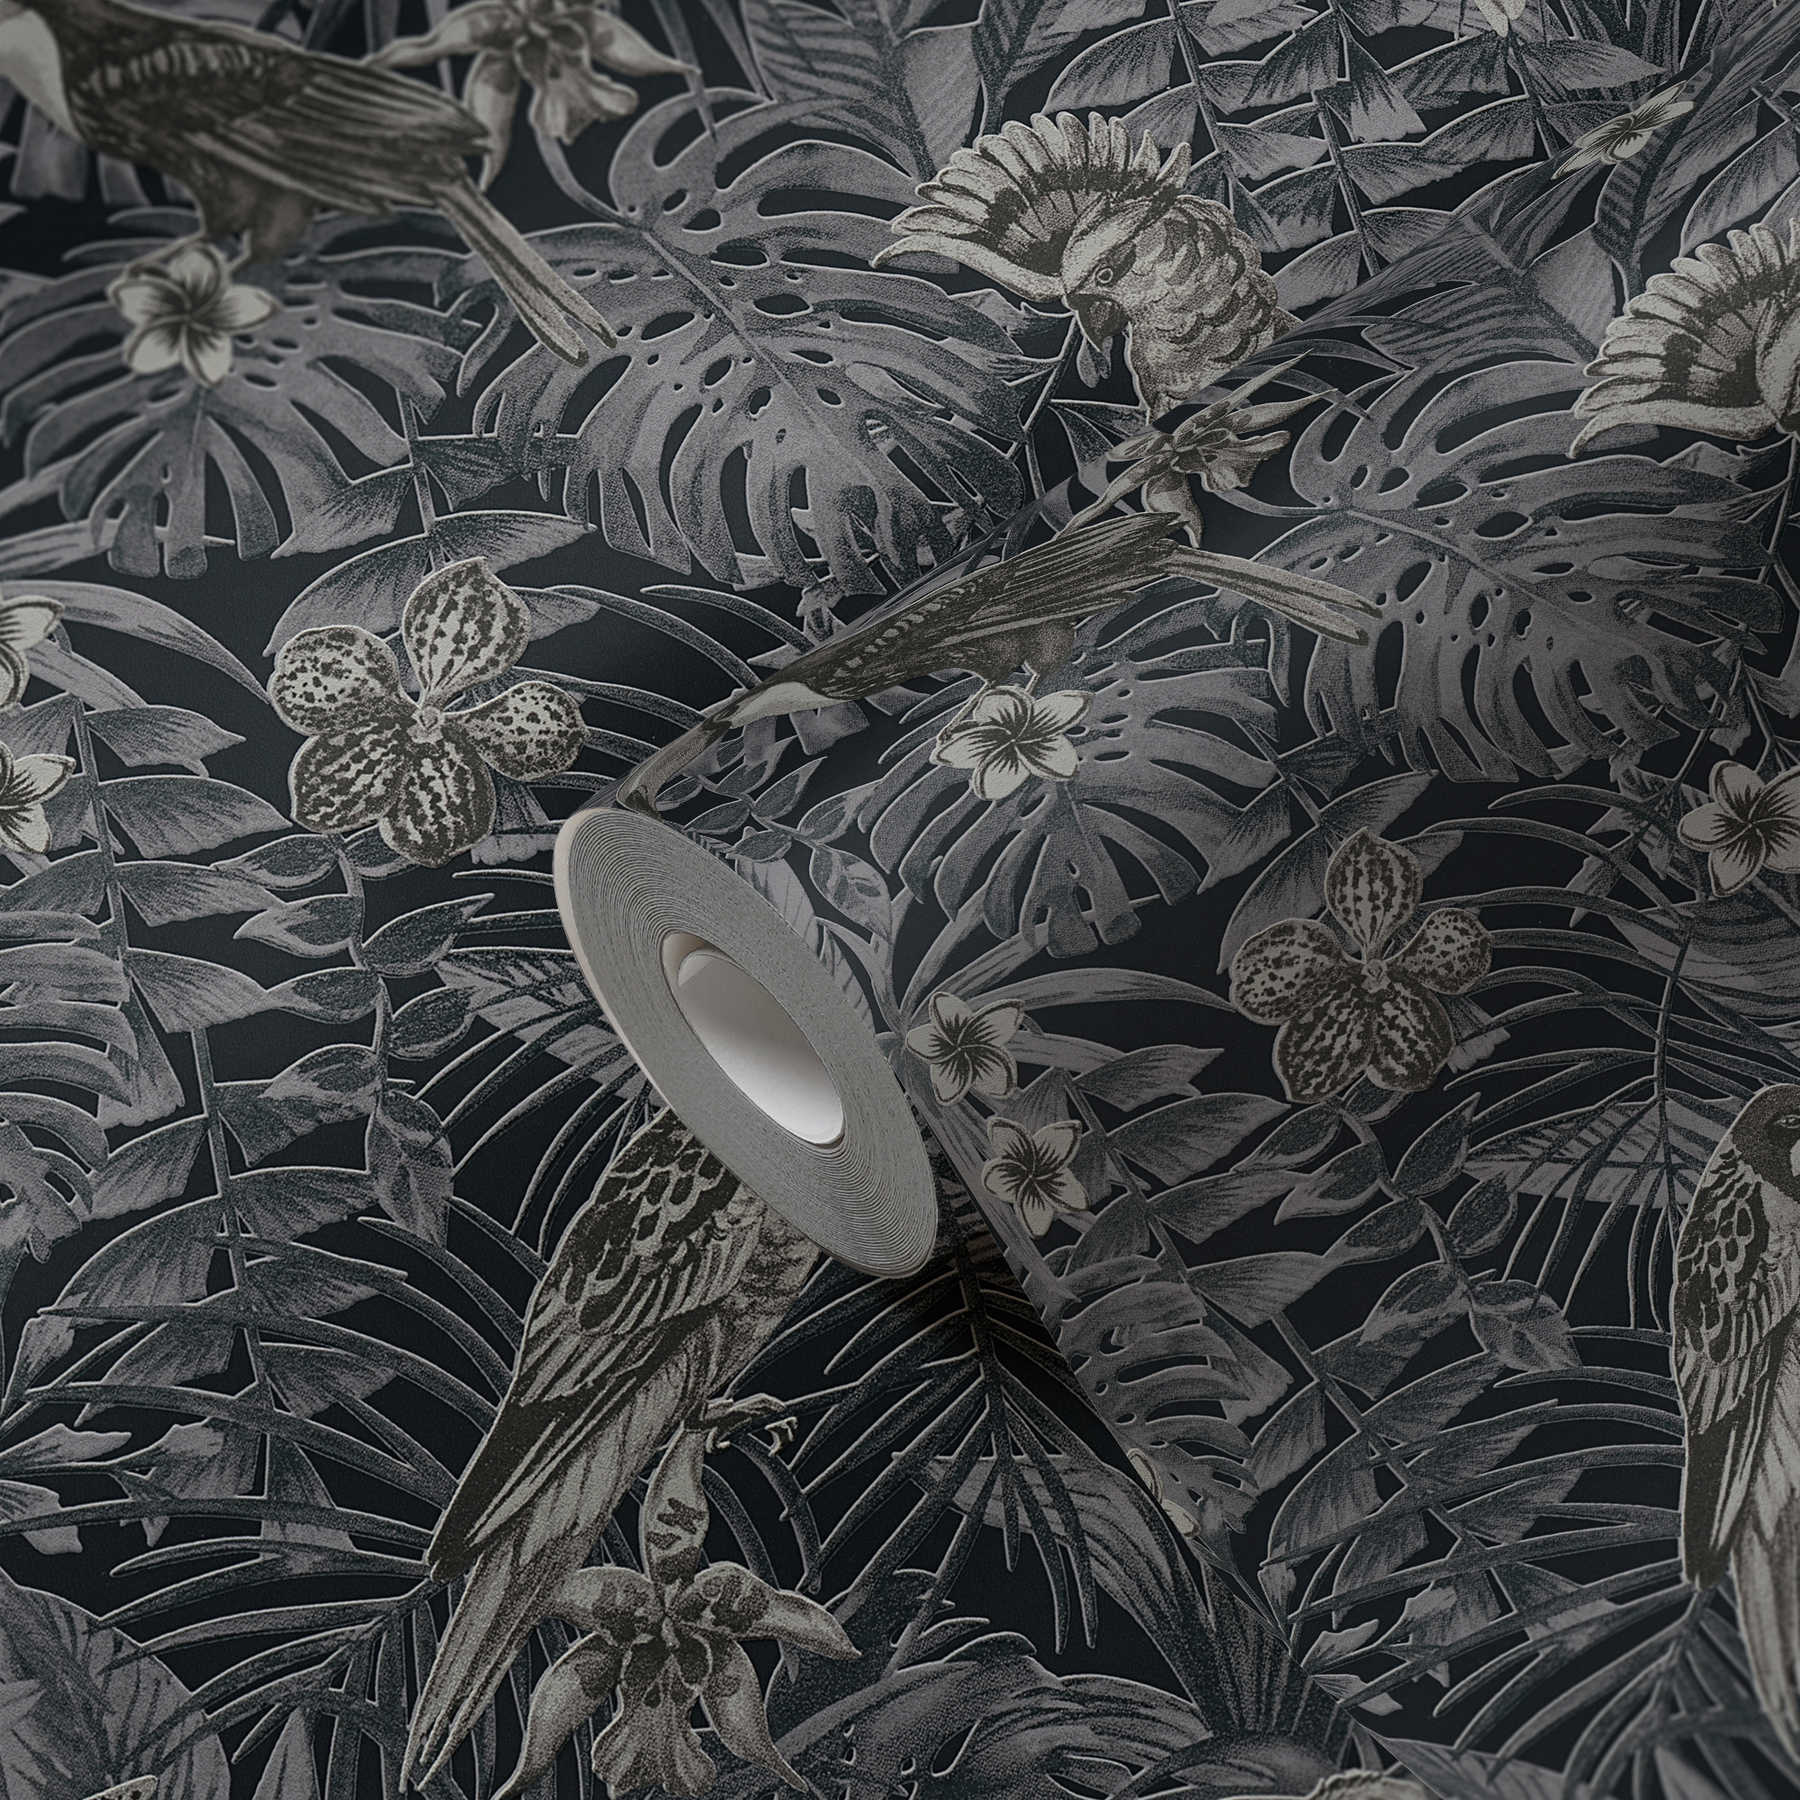             Exotic wallpaper tropical birds, flowers & leaves - grey, black, cream
        